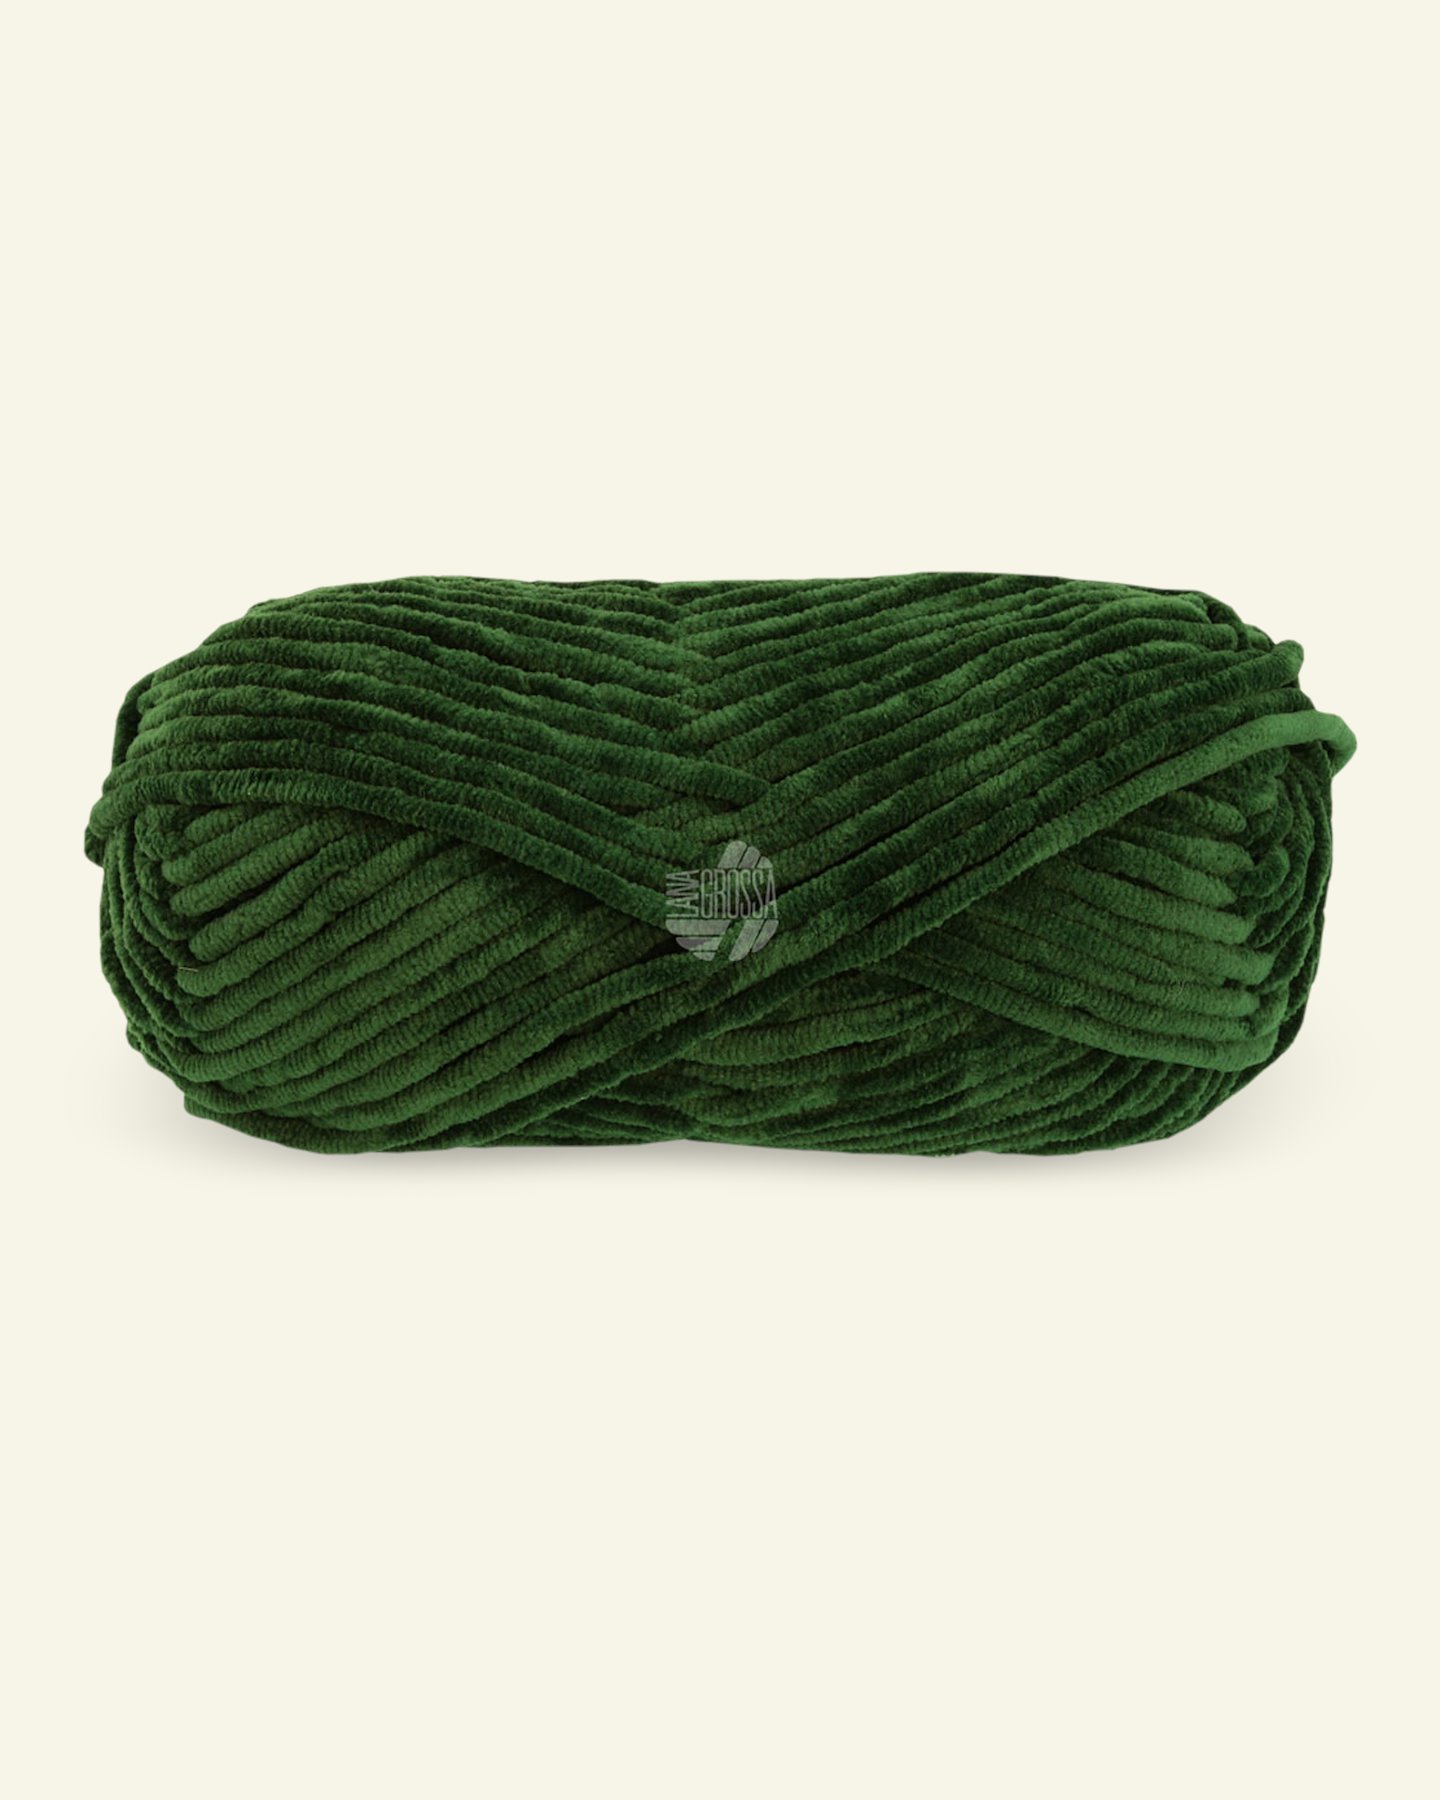 Lana Grossa, polyester yarn / velour yarn "The Look", bottle green 90001143_pack